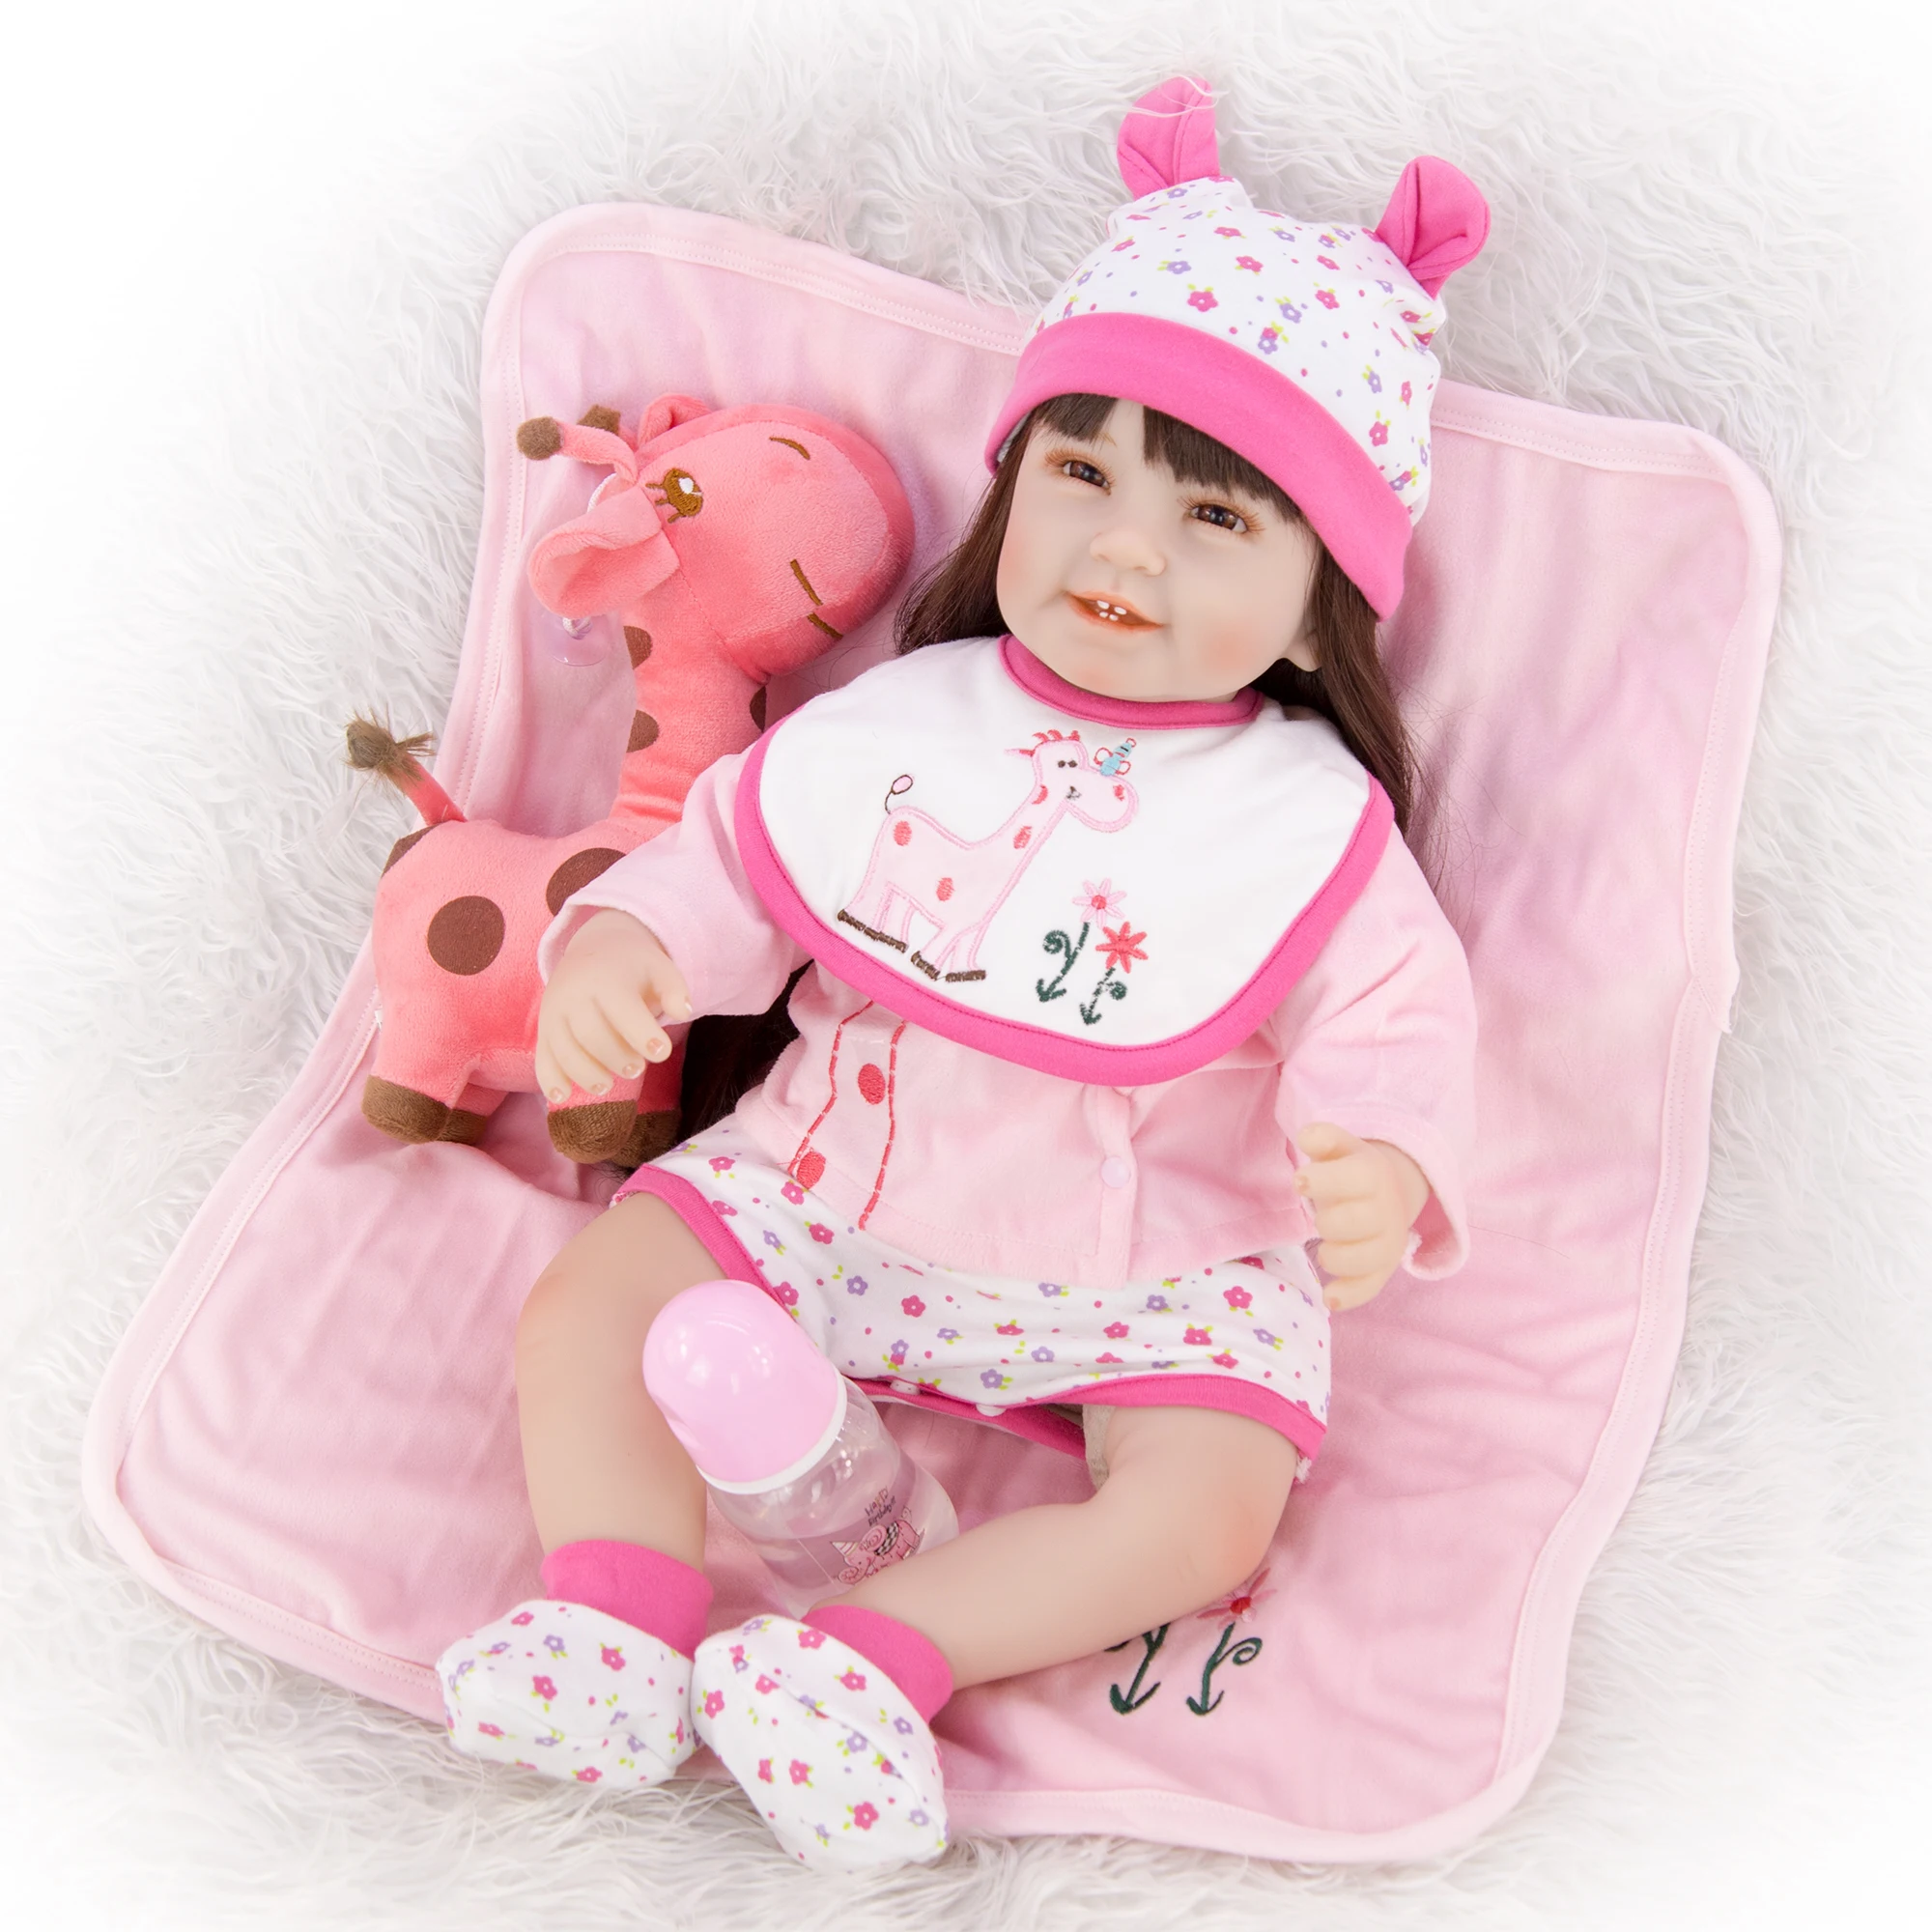 Кукла реборн KEIUMI специальная кукла младенец с улыбающимся лицом 22 дюйма 55 см